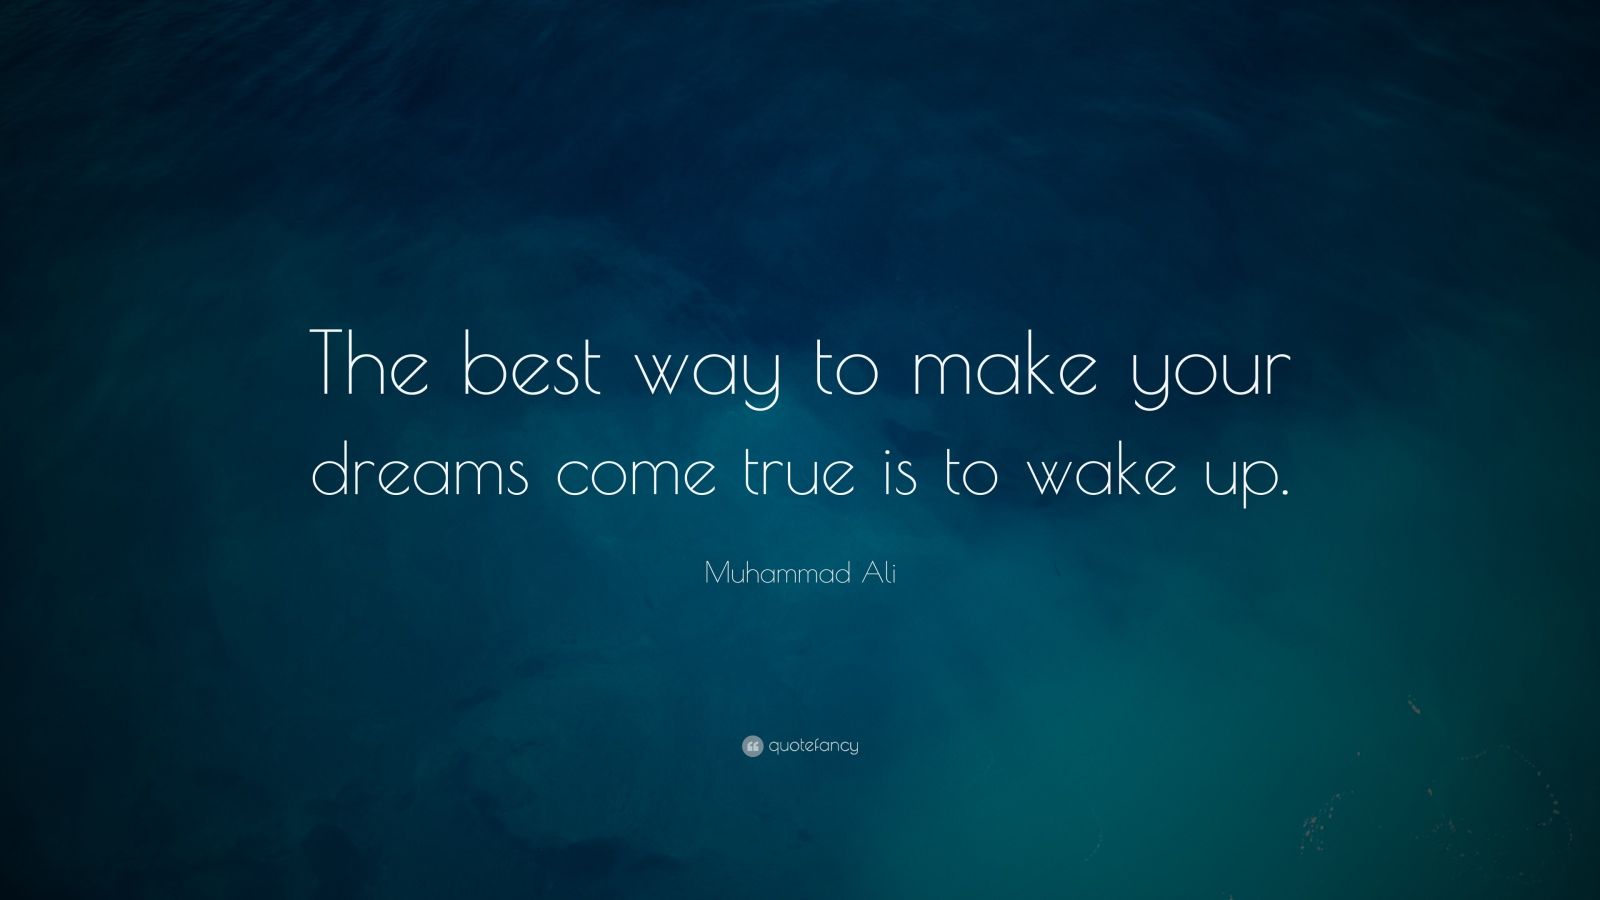 Muhammad Ali Quotes (27 wallpapers) - Quotefancy